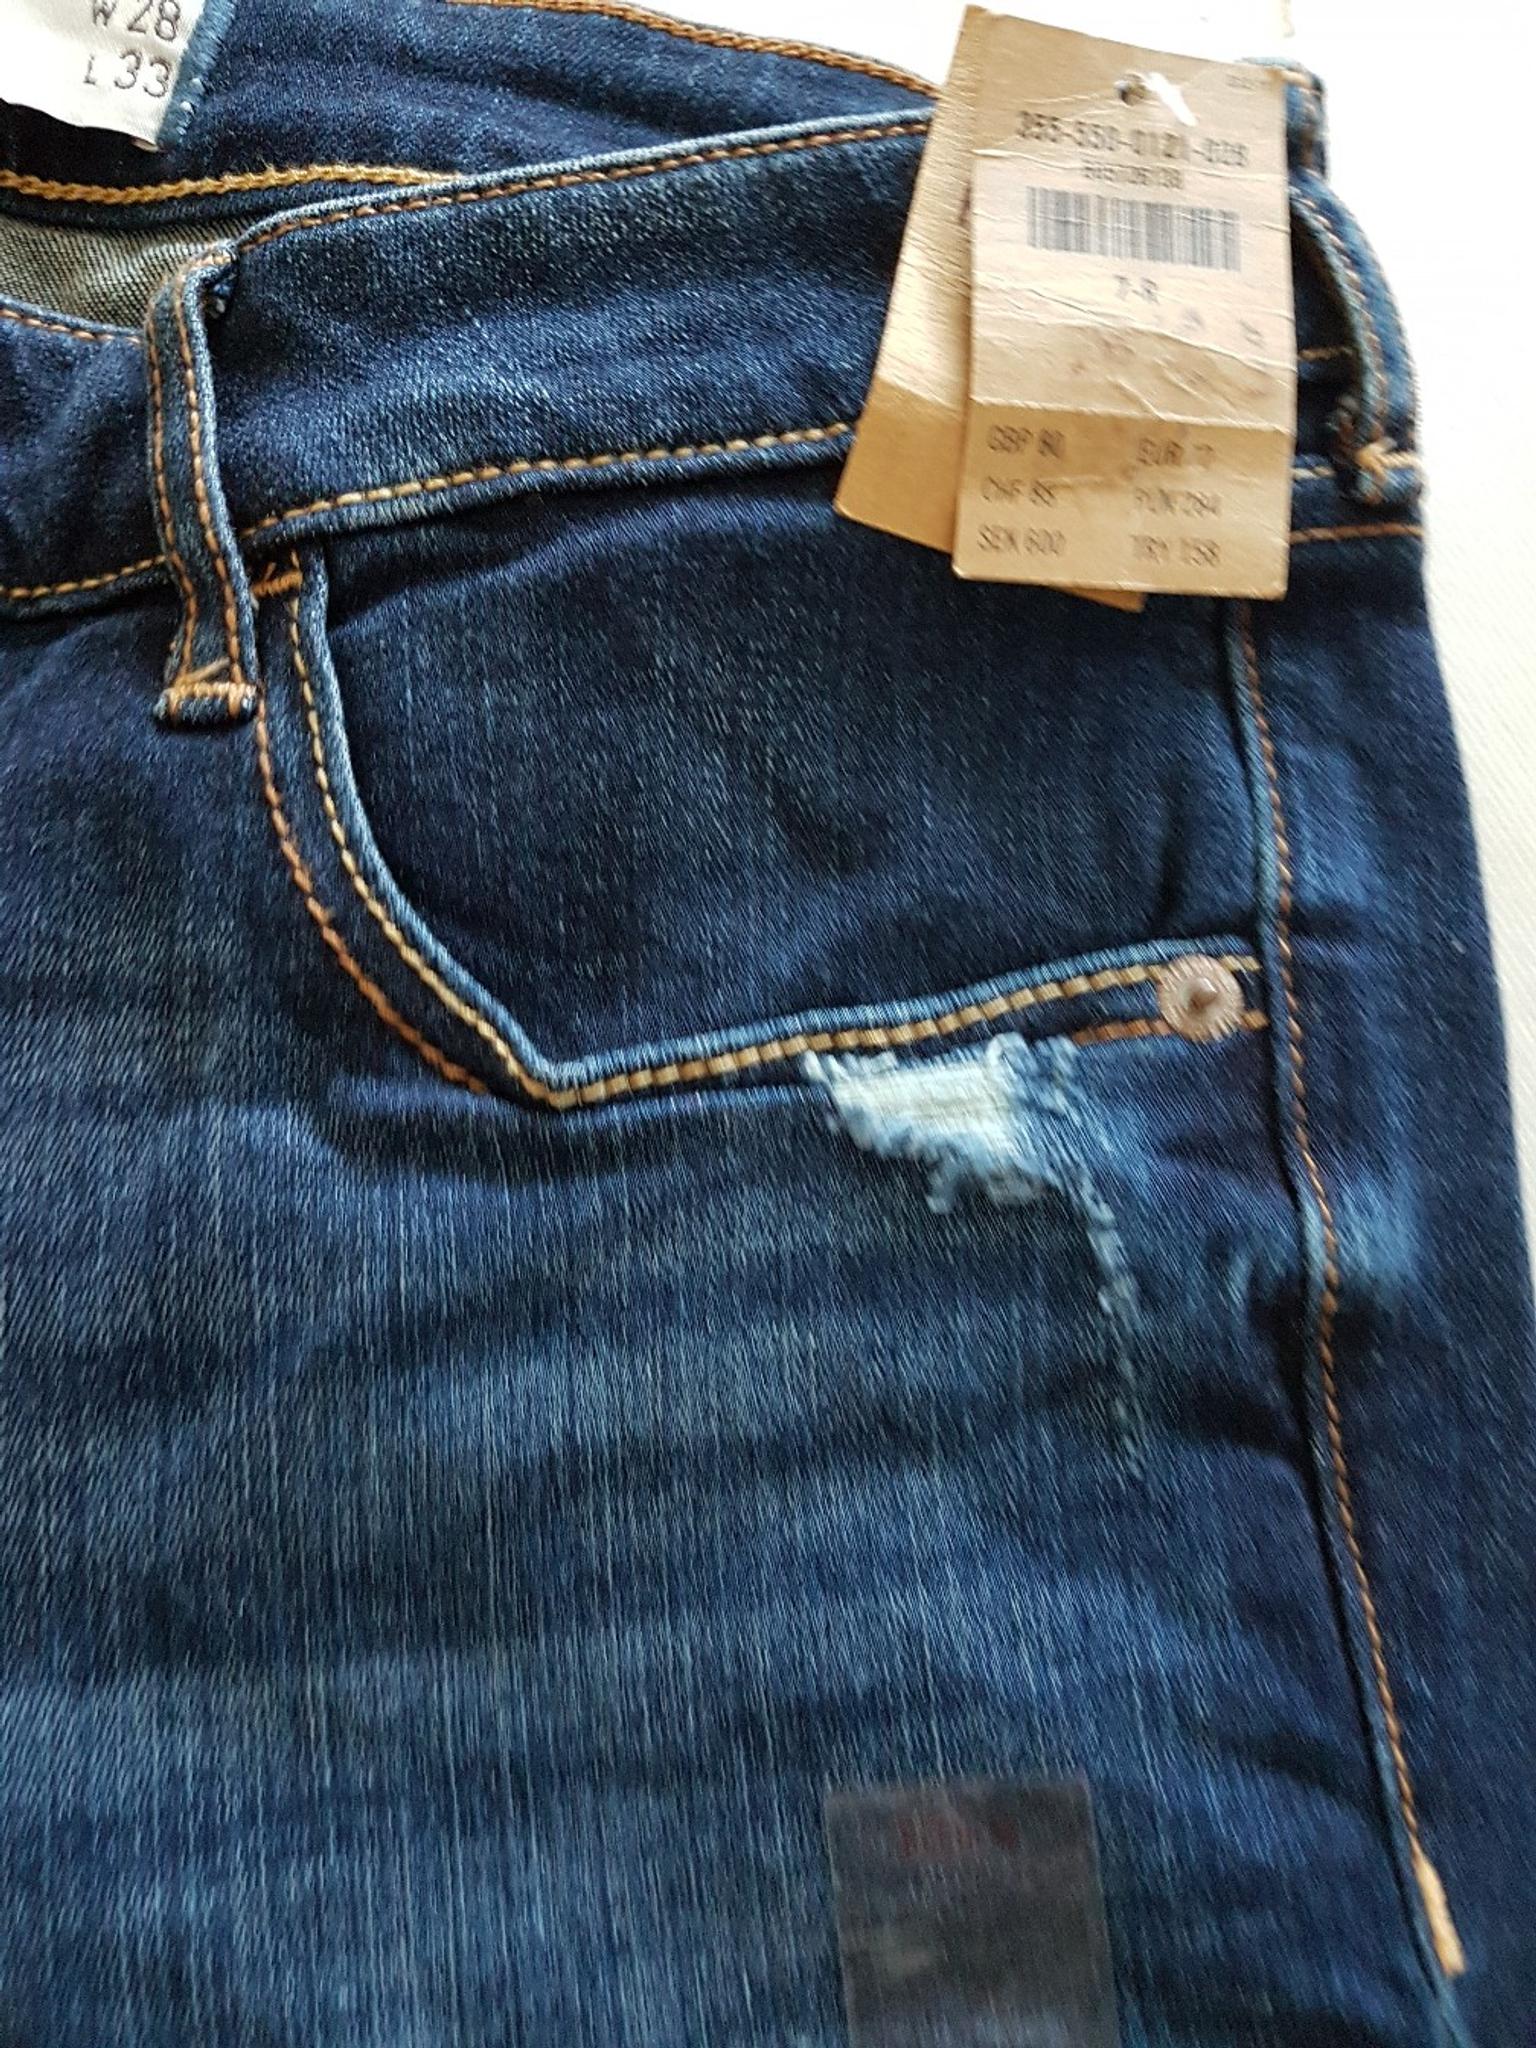 hollister original jeans